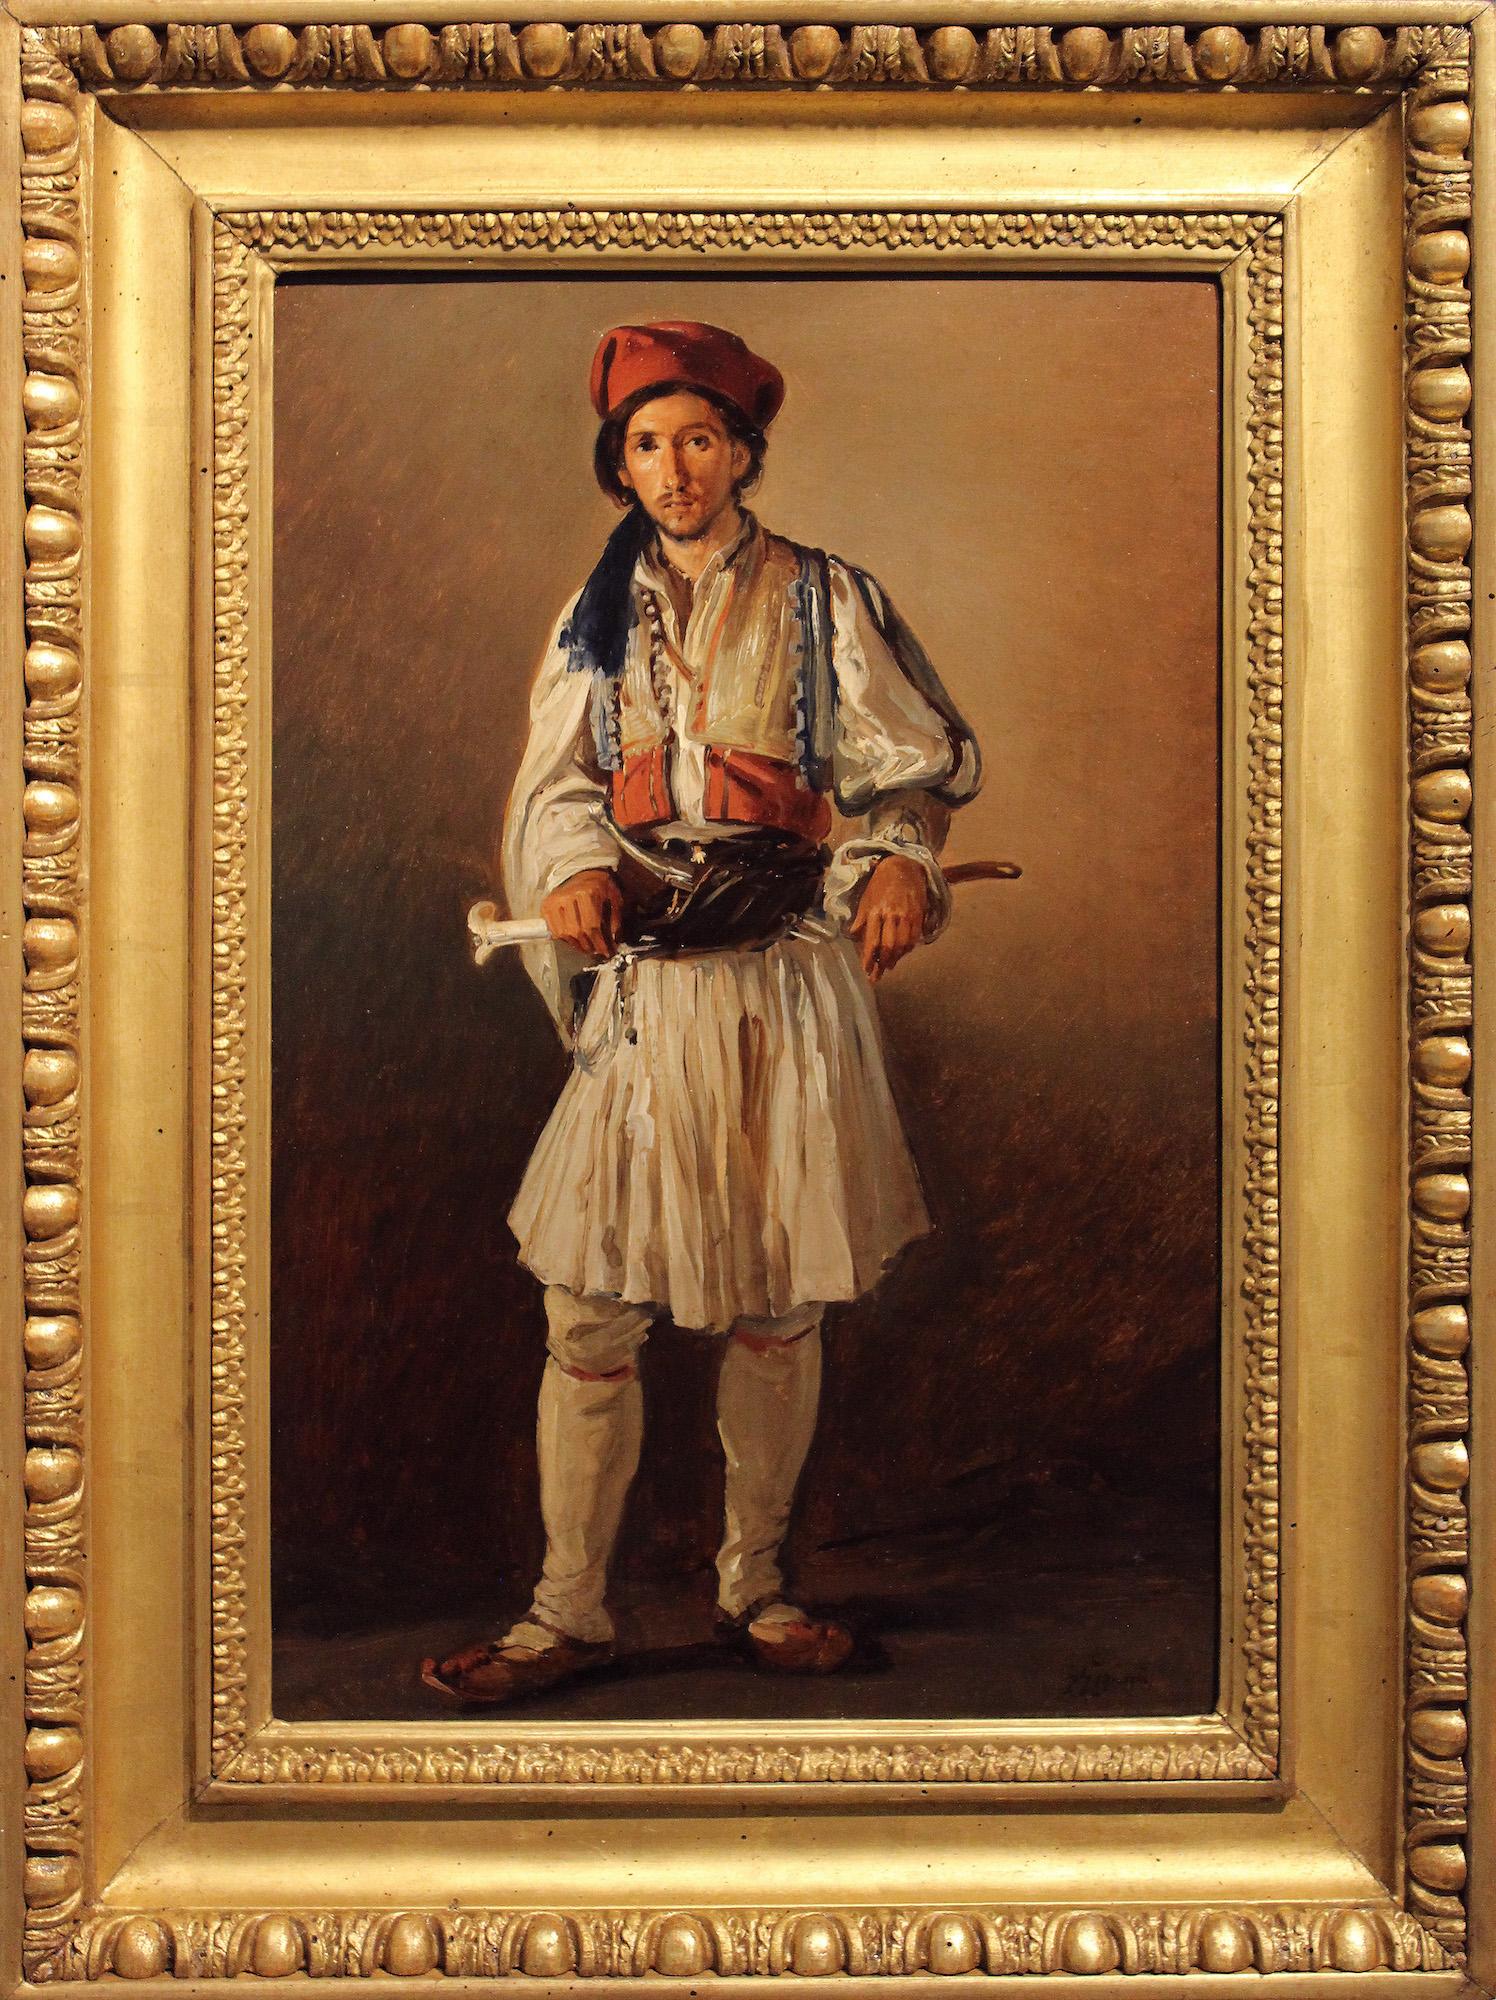 GREEK SOLDIER (CORPORAL OF THE IRREGULARS) - Painting by Gaetano Gigante